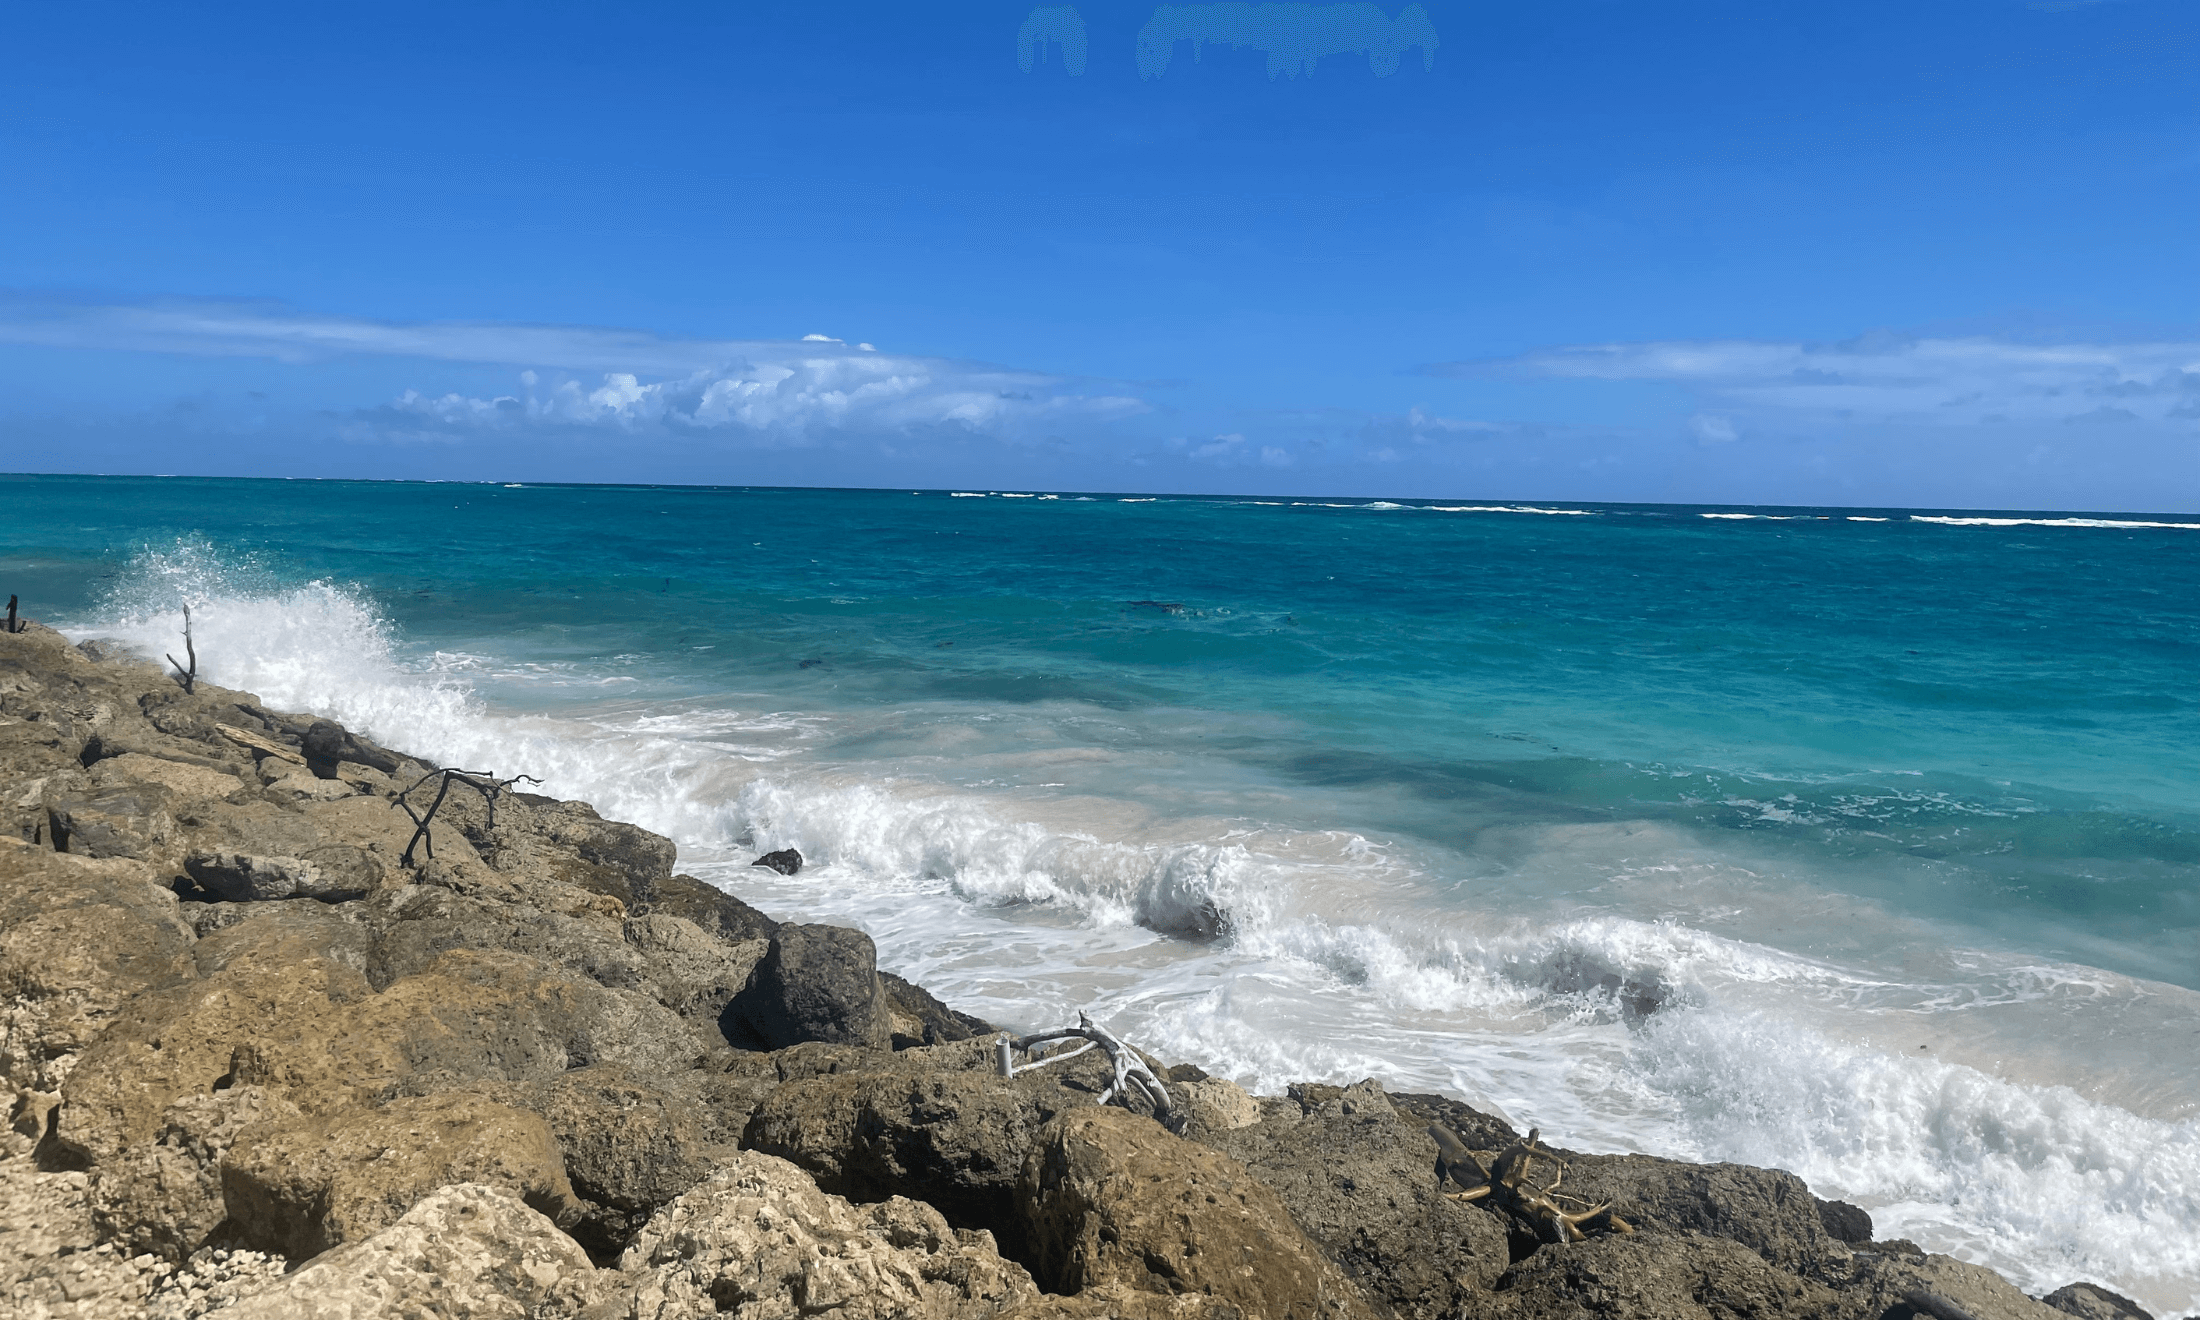 Wanderthirst: bringing my whole self back home to Barbados